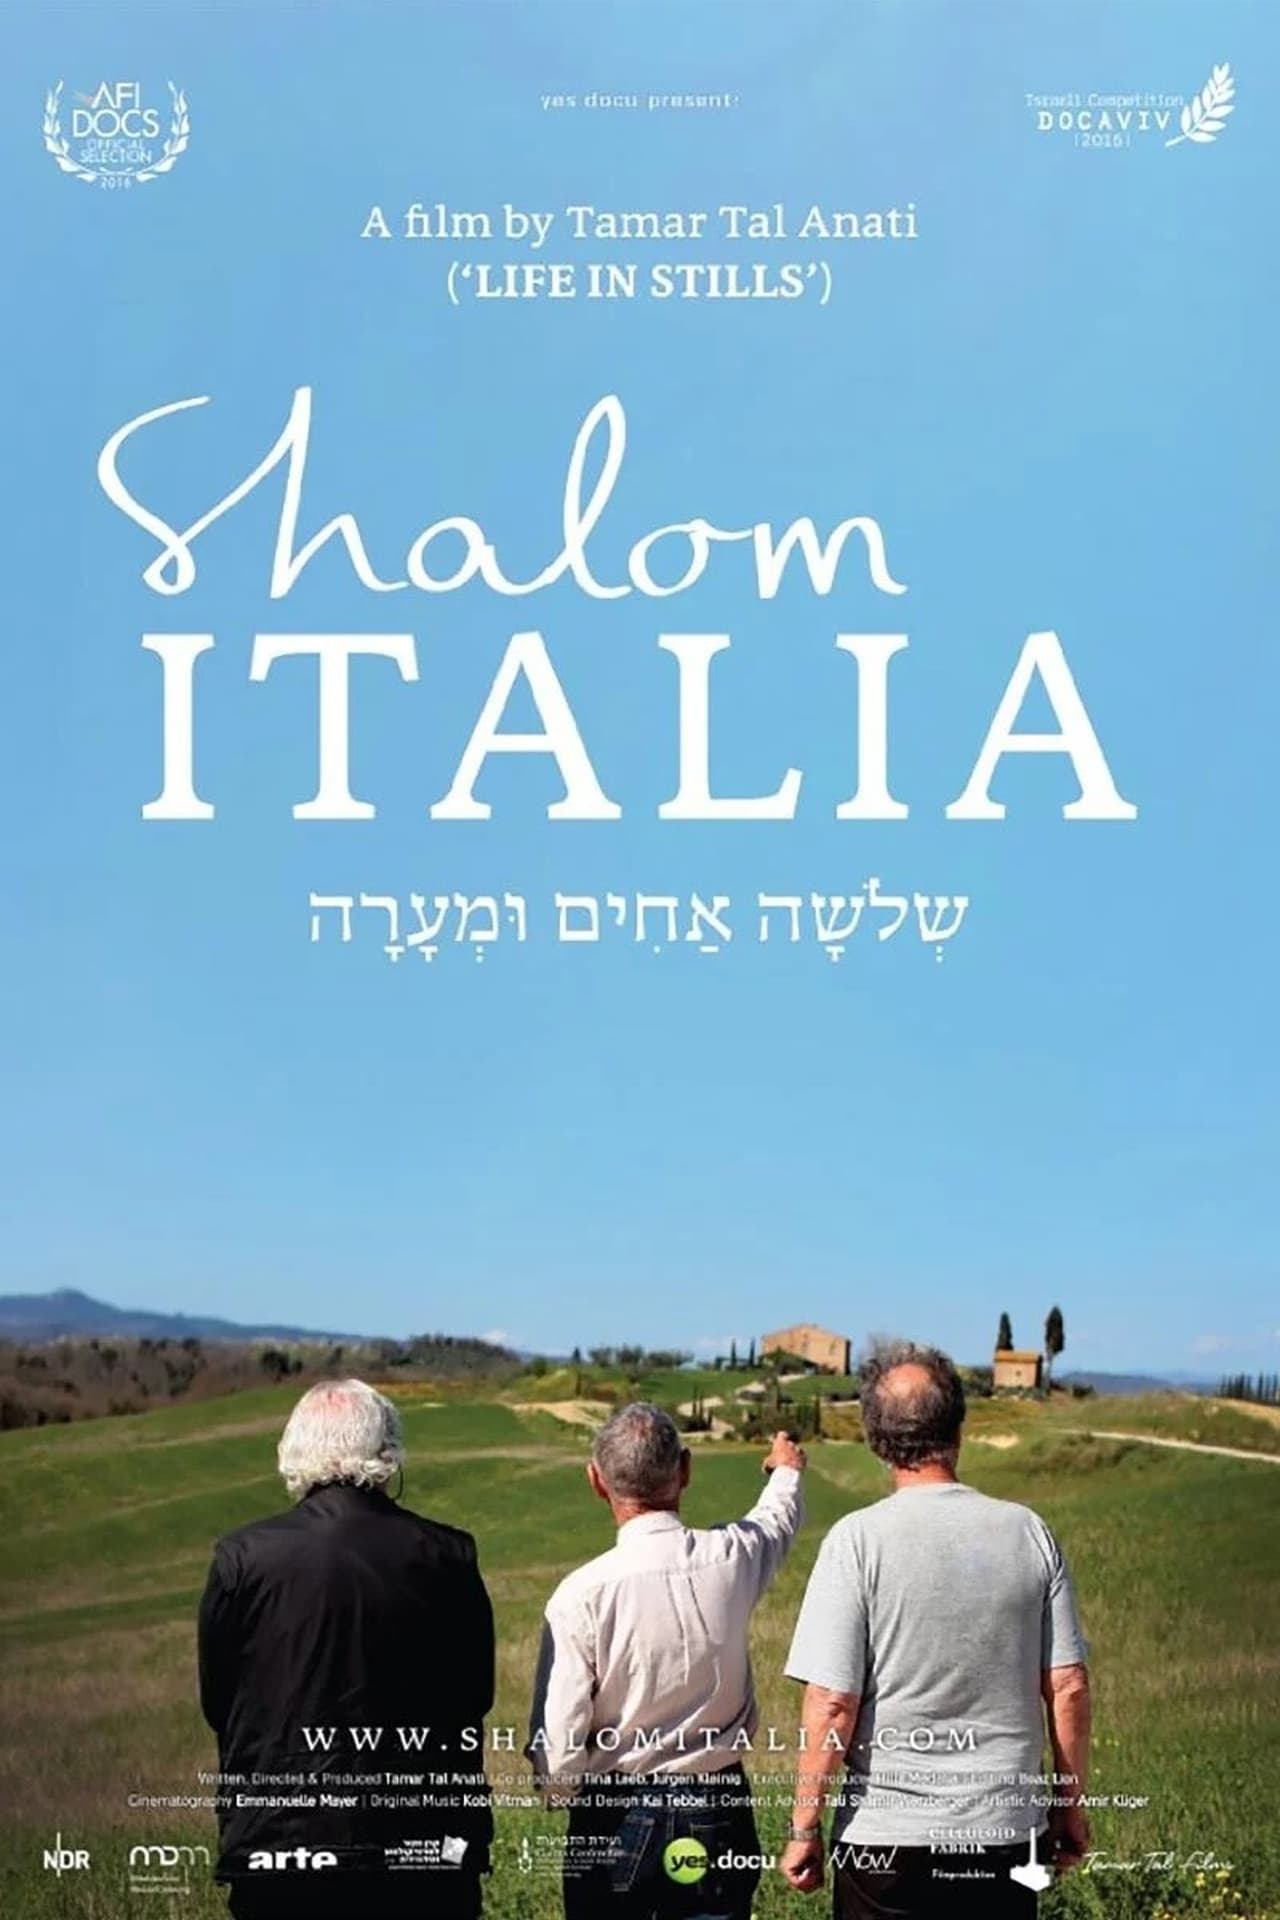 Shalom Italia